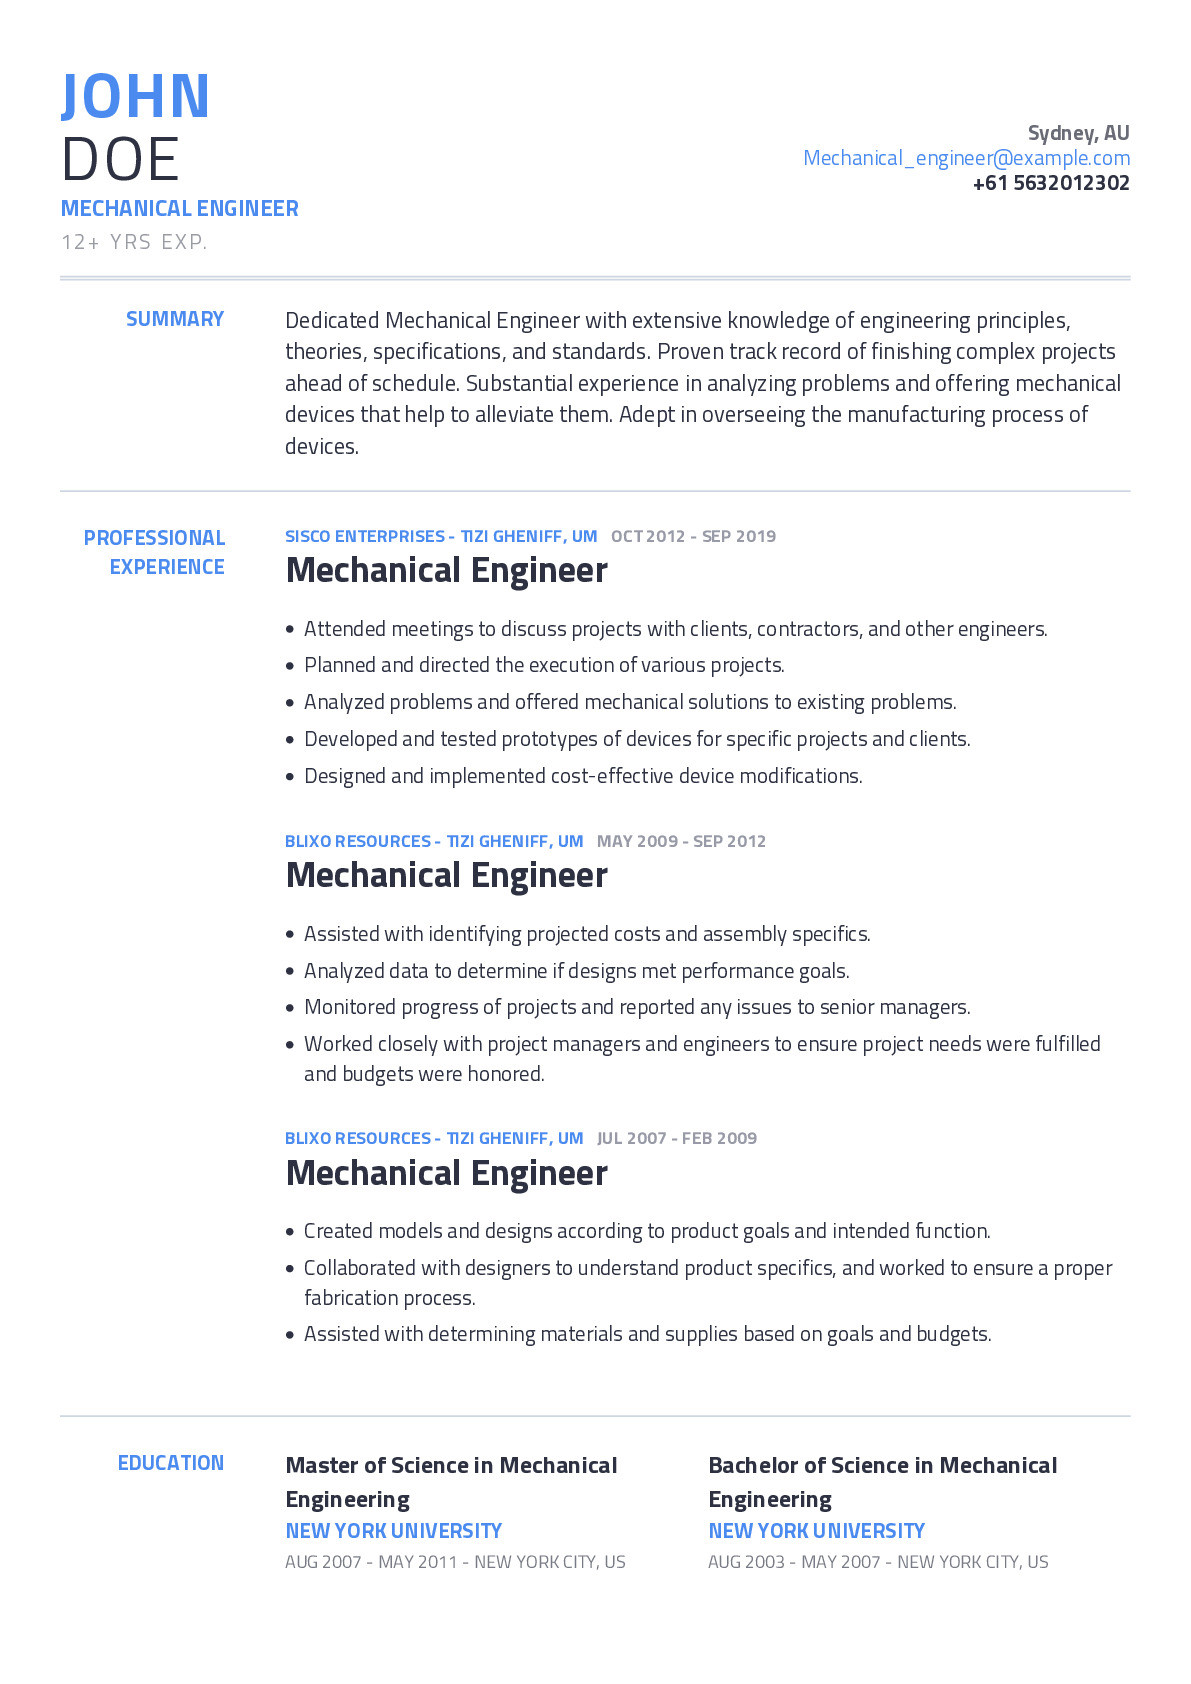 Sample Resumes for Mechanical Engineer Jobs Mechanical Engineer Resume Example with Content Sample Craftmycv